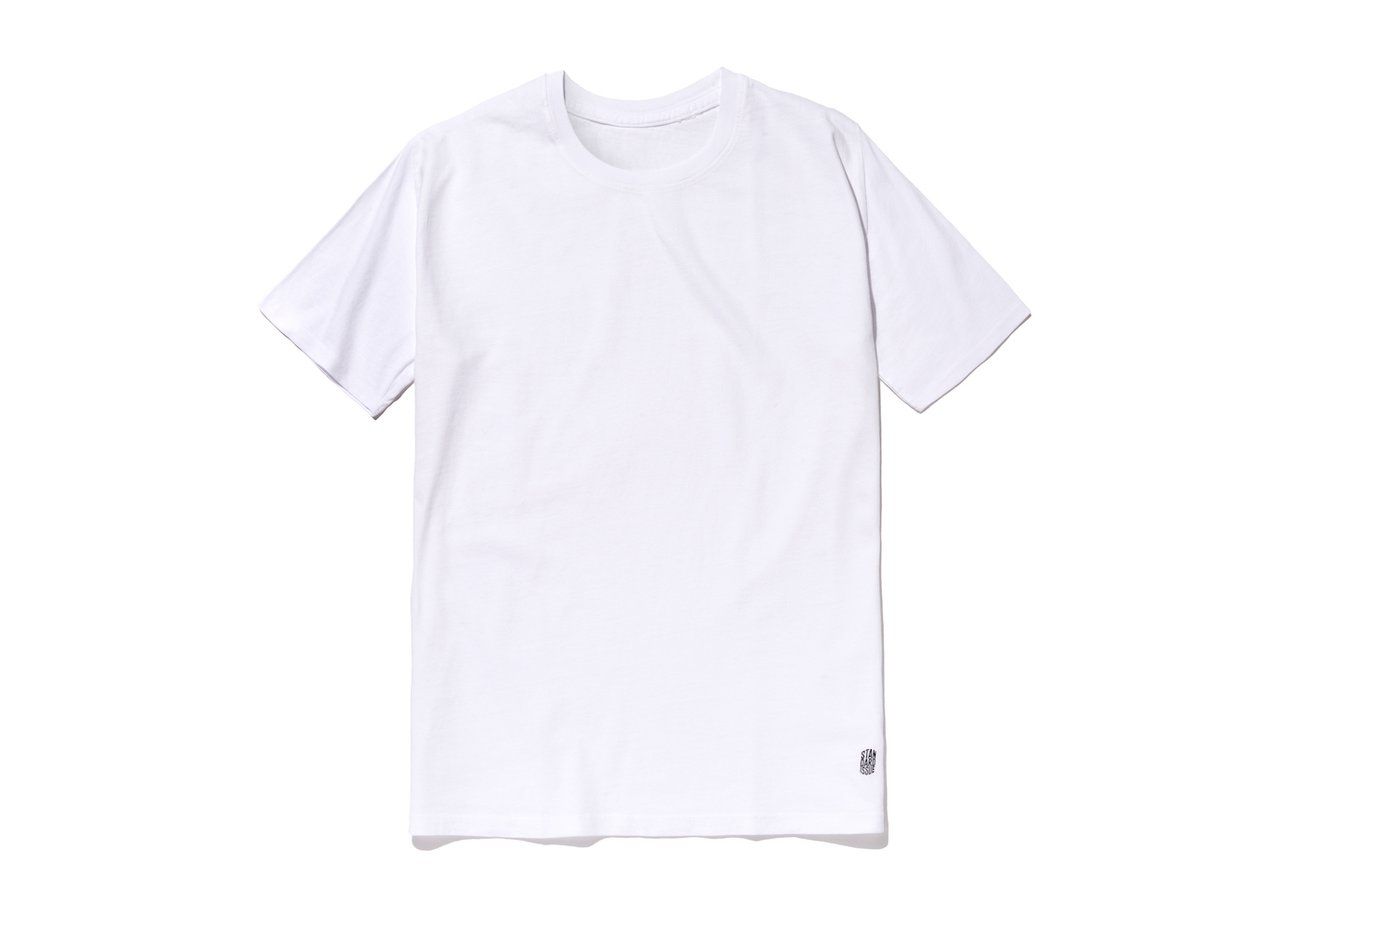 18 Best White T-Shirts for Men 2023